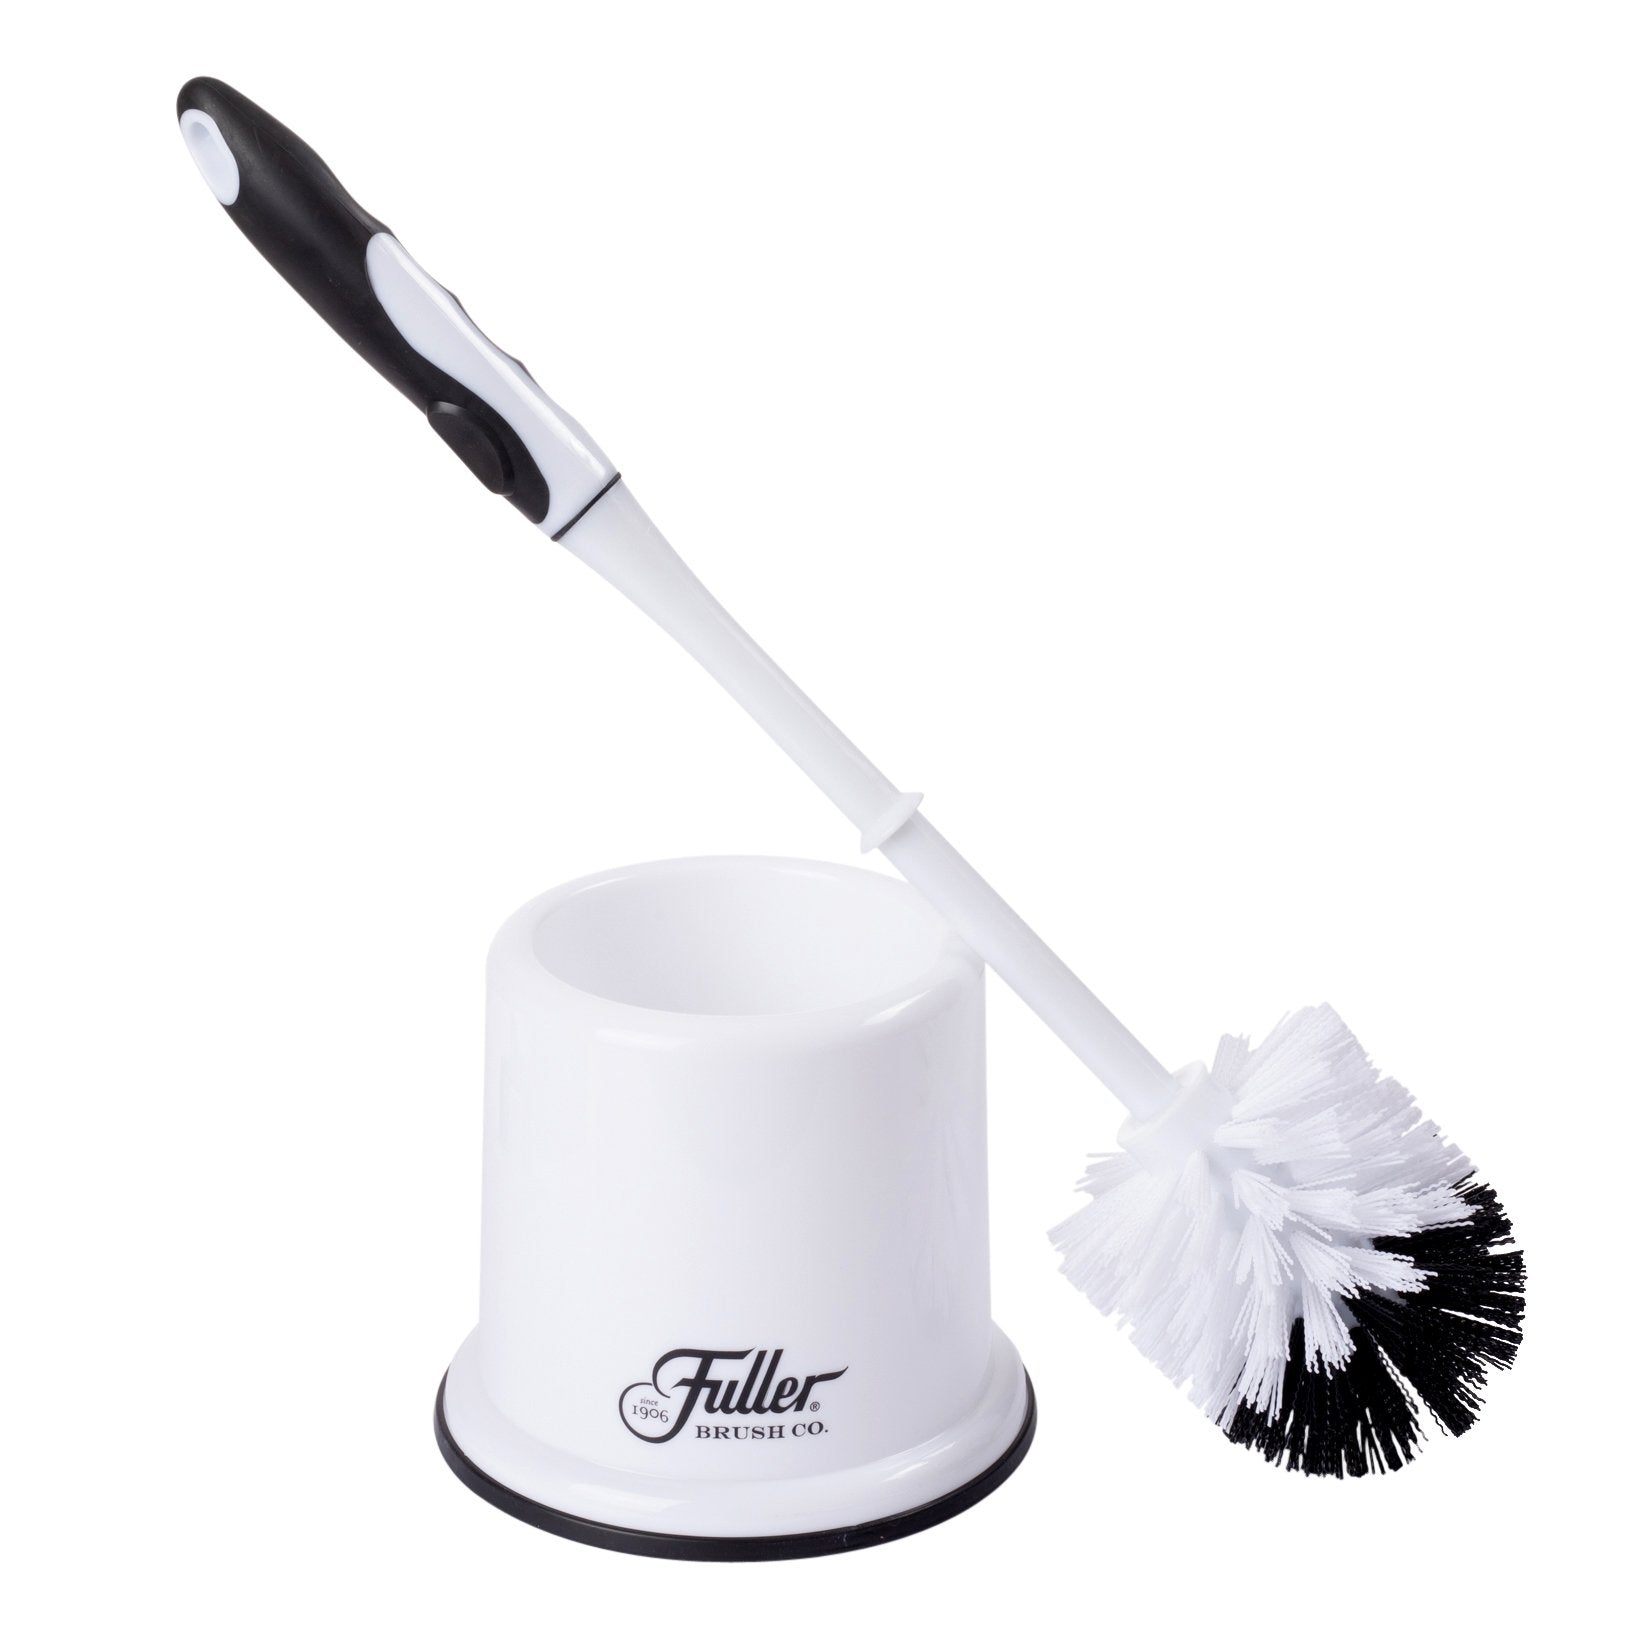 Fuller Brush | Premium Bowl Brush in Caddy Set | 392